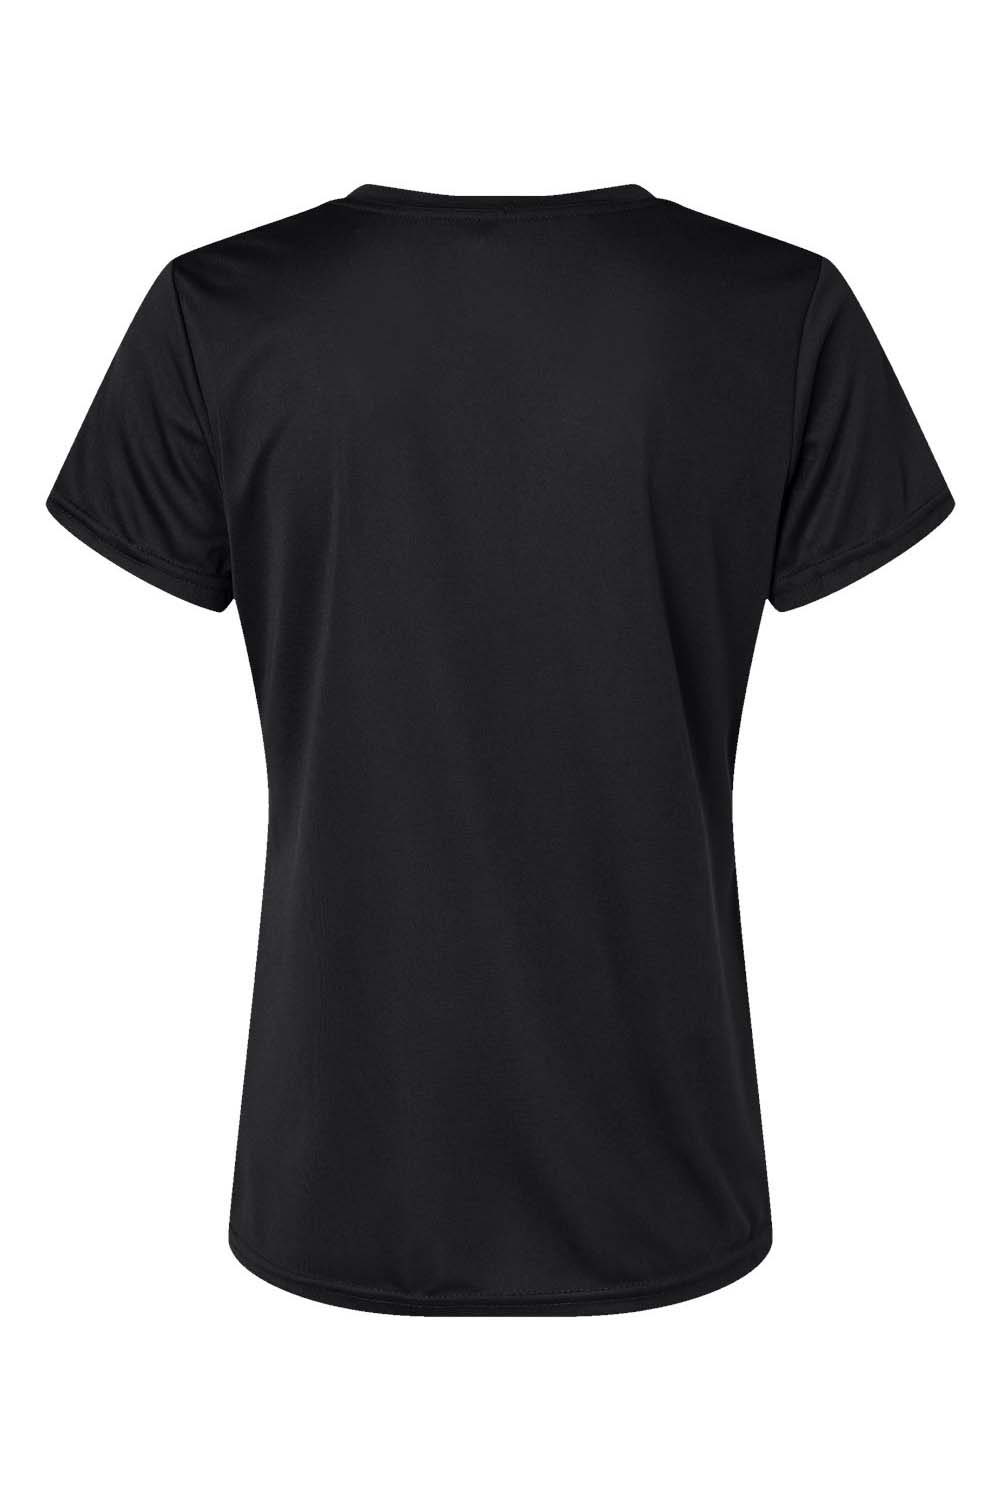 Augusta Sportswear 1790 Womens Moisture Wicking Short Sleeve V-Neck T-Shirt Black Model Flat Back